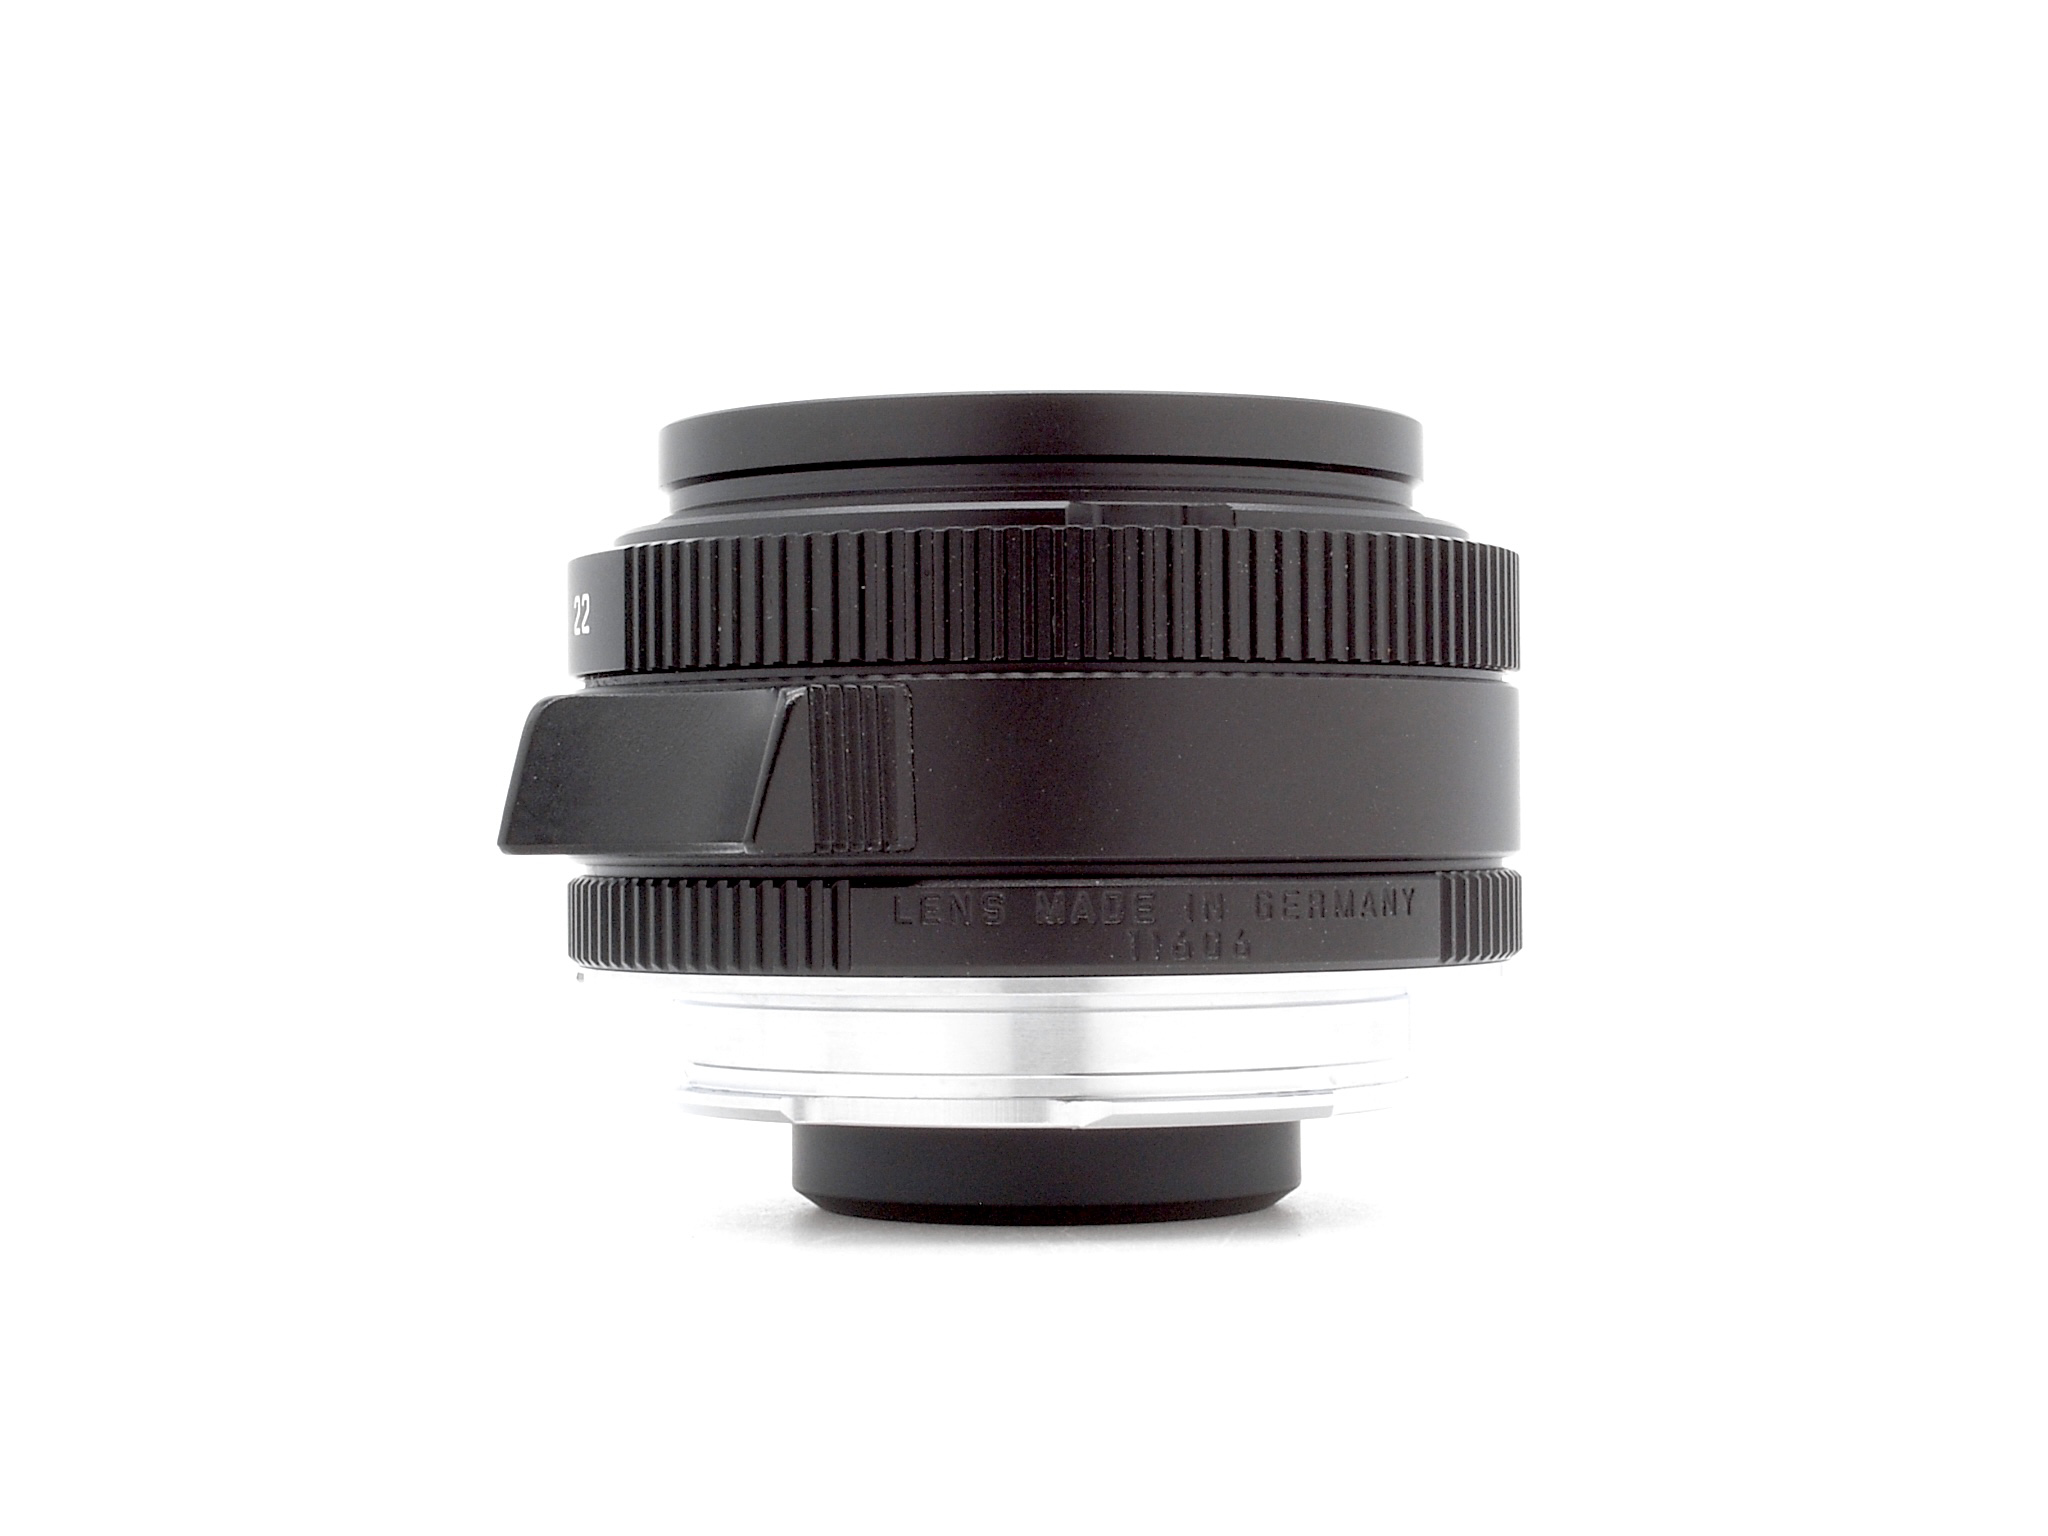 Leica Elmarit-M 2.8/28mm ASPH. black 6Bit